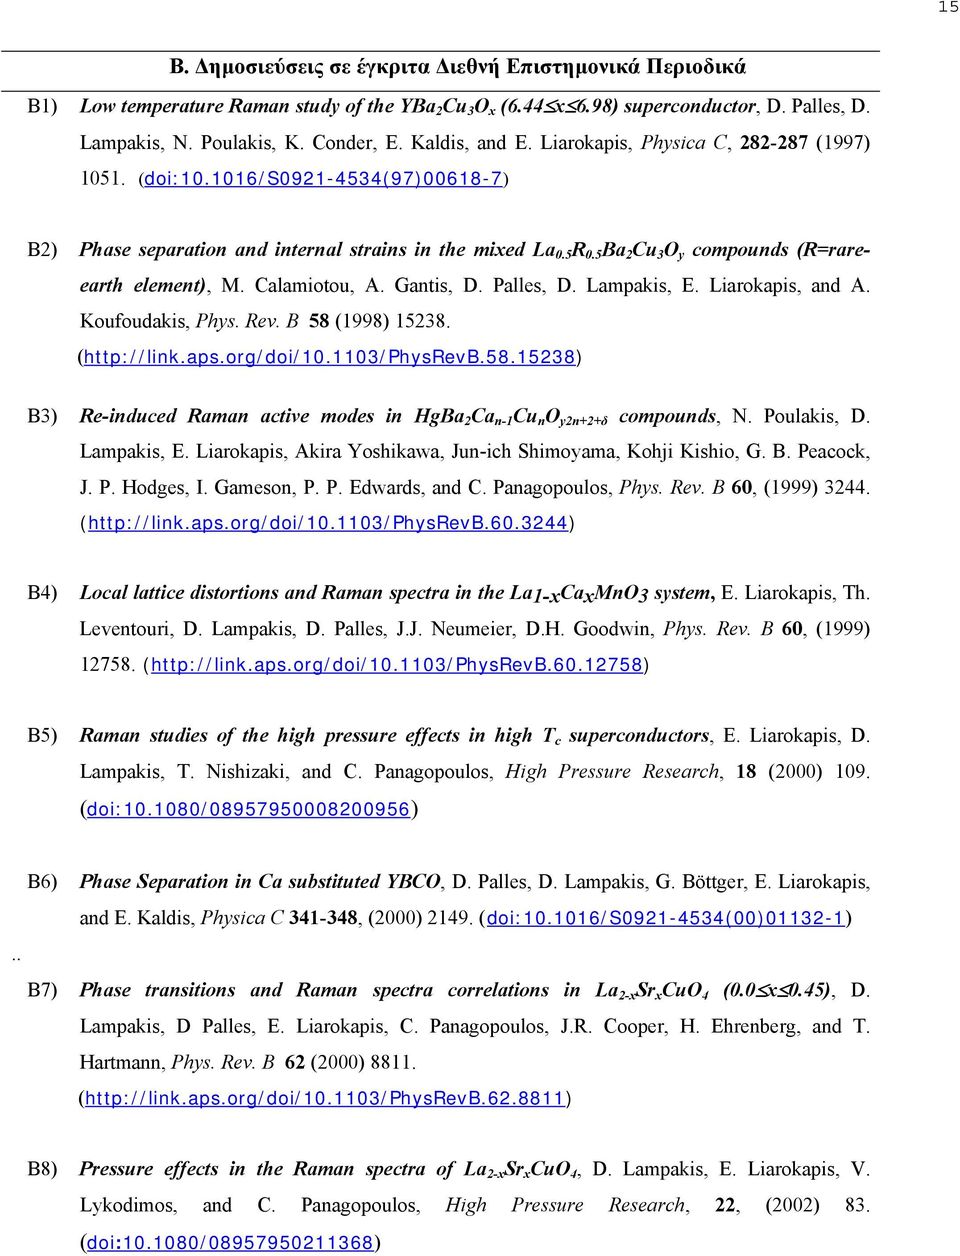 5 Ba 2 Cu 3 O y compounds (R=rareearth element), M. Calamiotou, A. Gantis, D. Palles, D. Lampakis, E. Liarokapis, and A. Koufoudakis, Phys. Rev. B 58 (1998) 15238. (http://link.aps.org/doi/10.